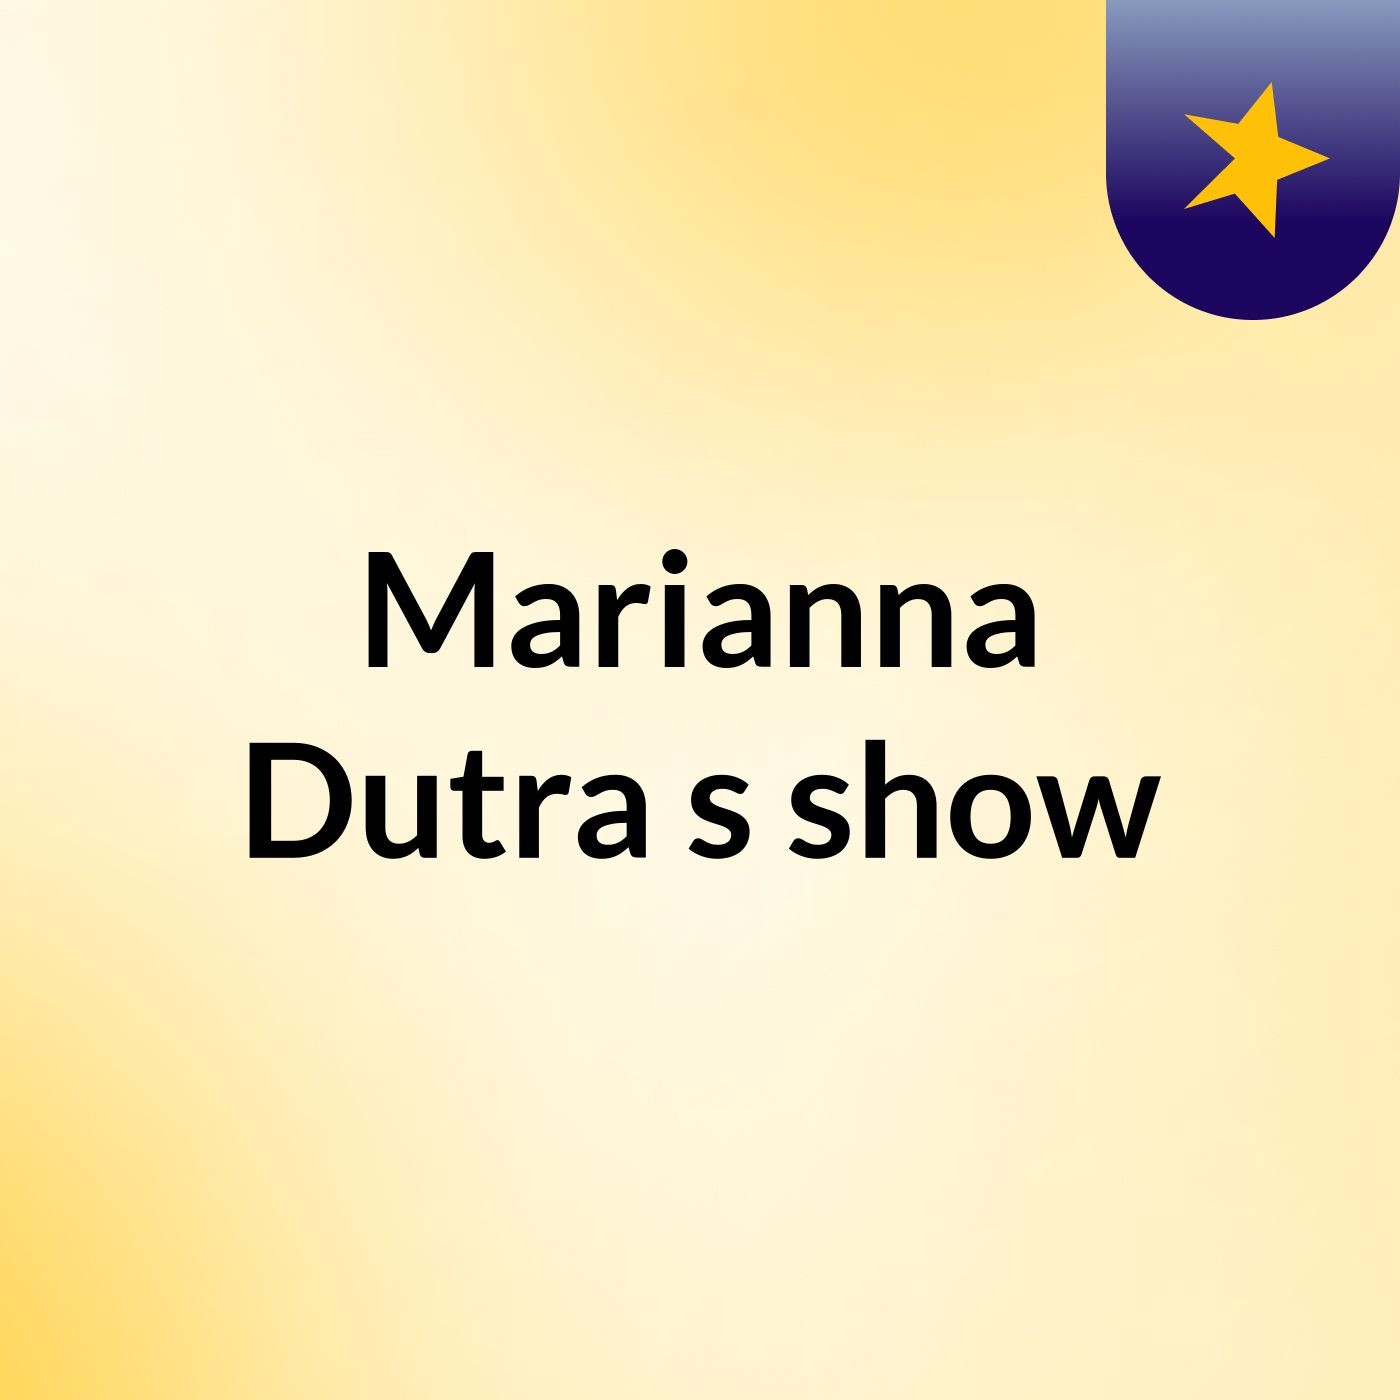 Marianna Dutra's show